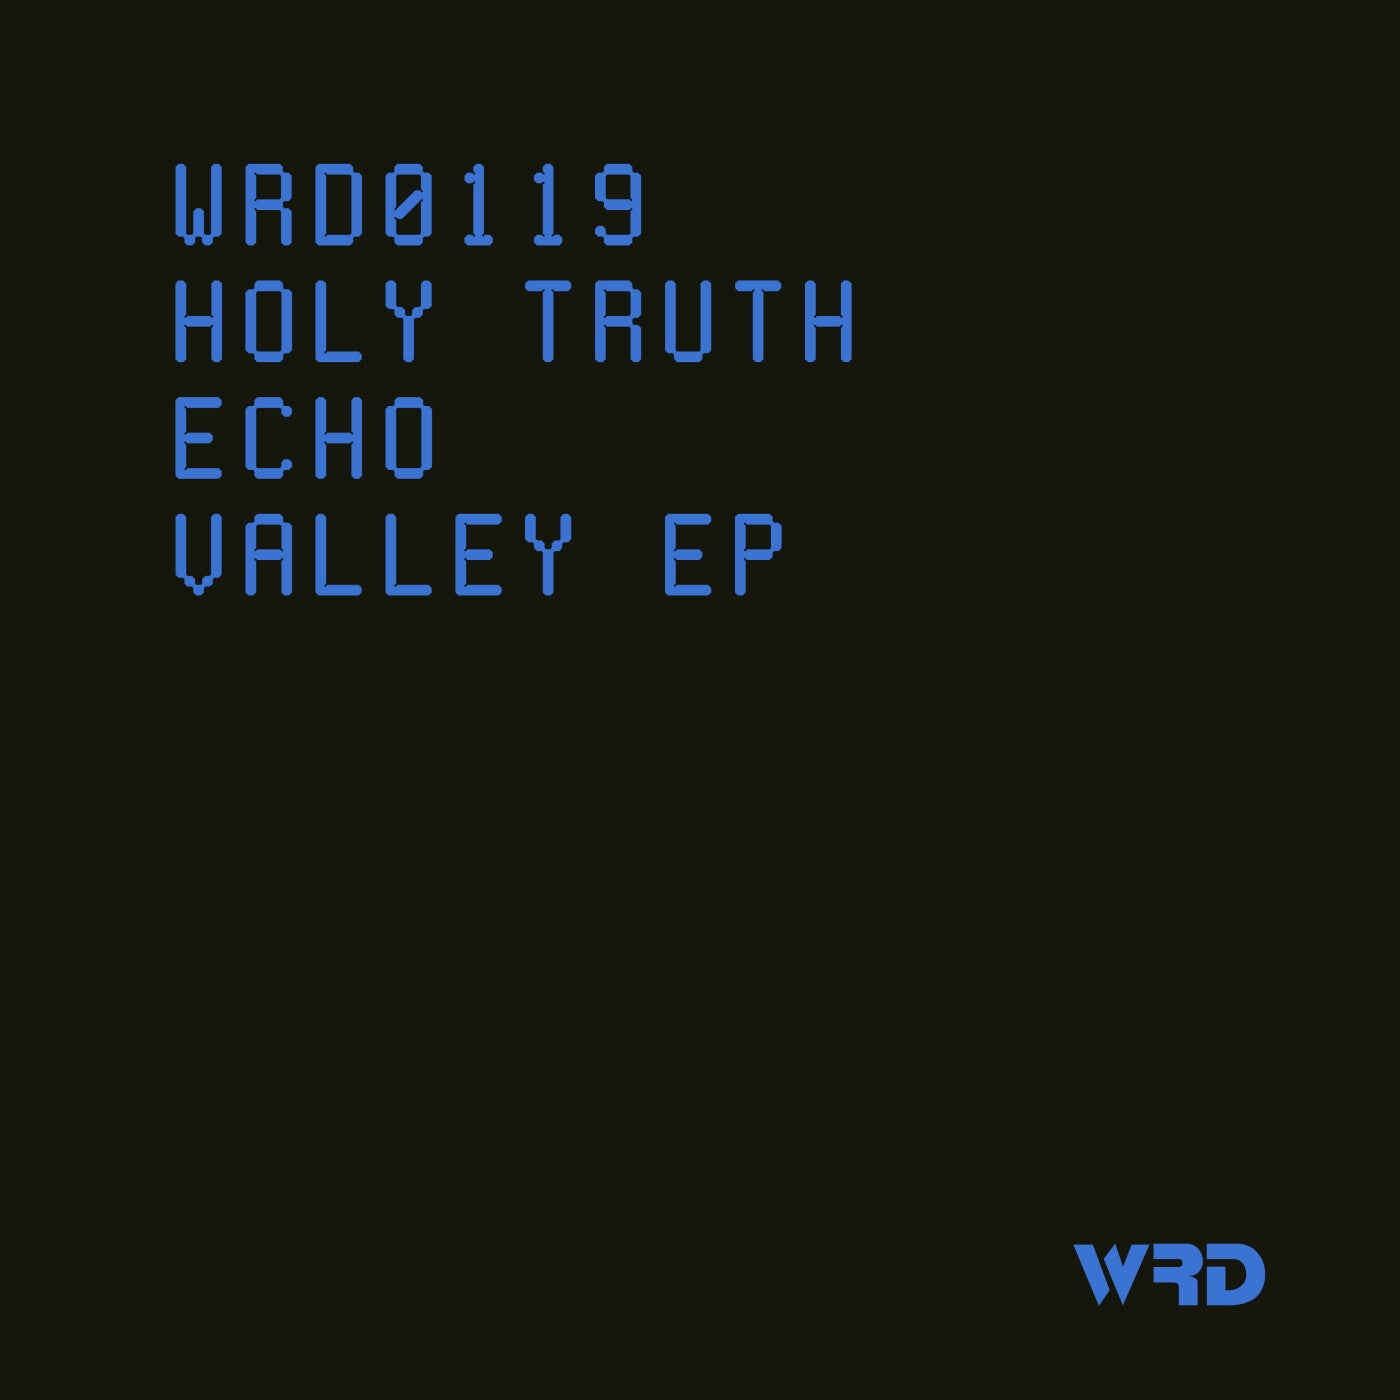 Echo Valley EP